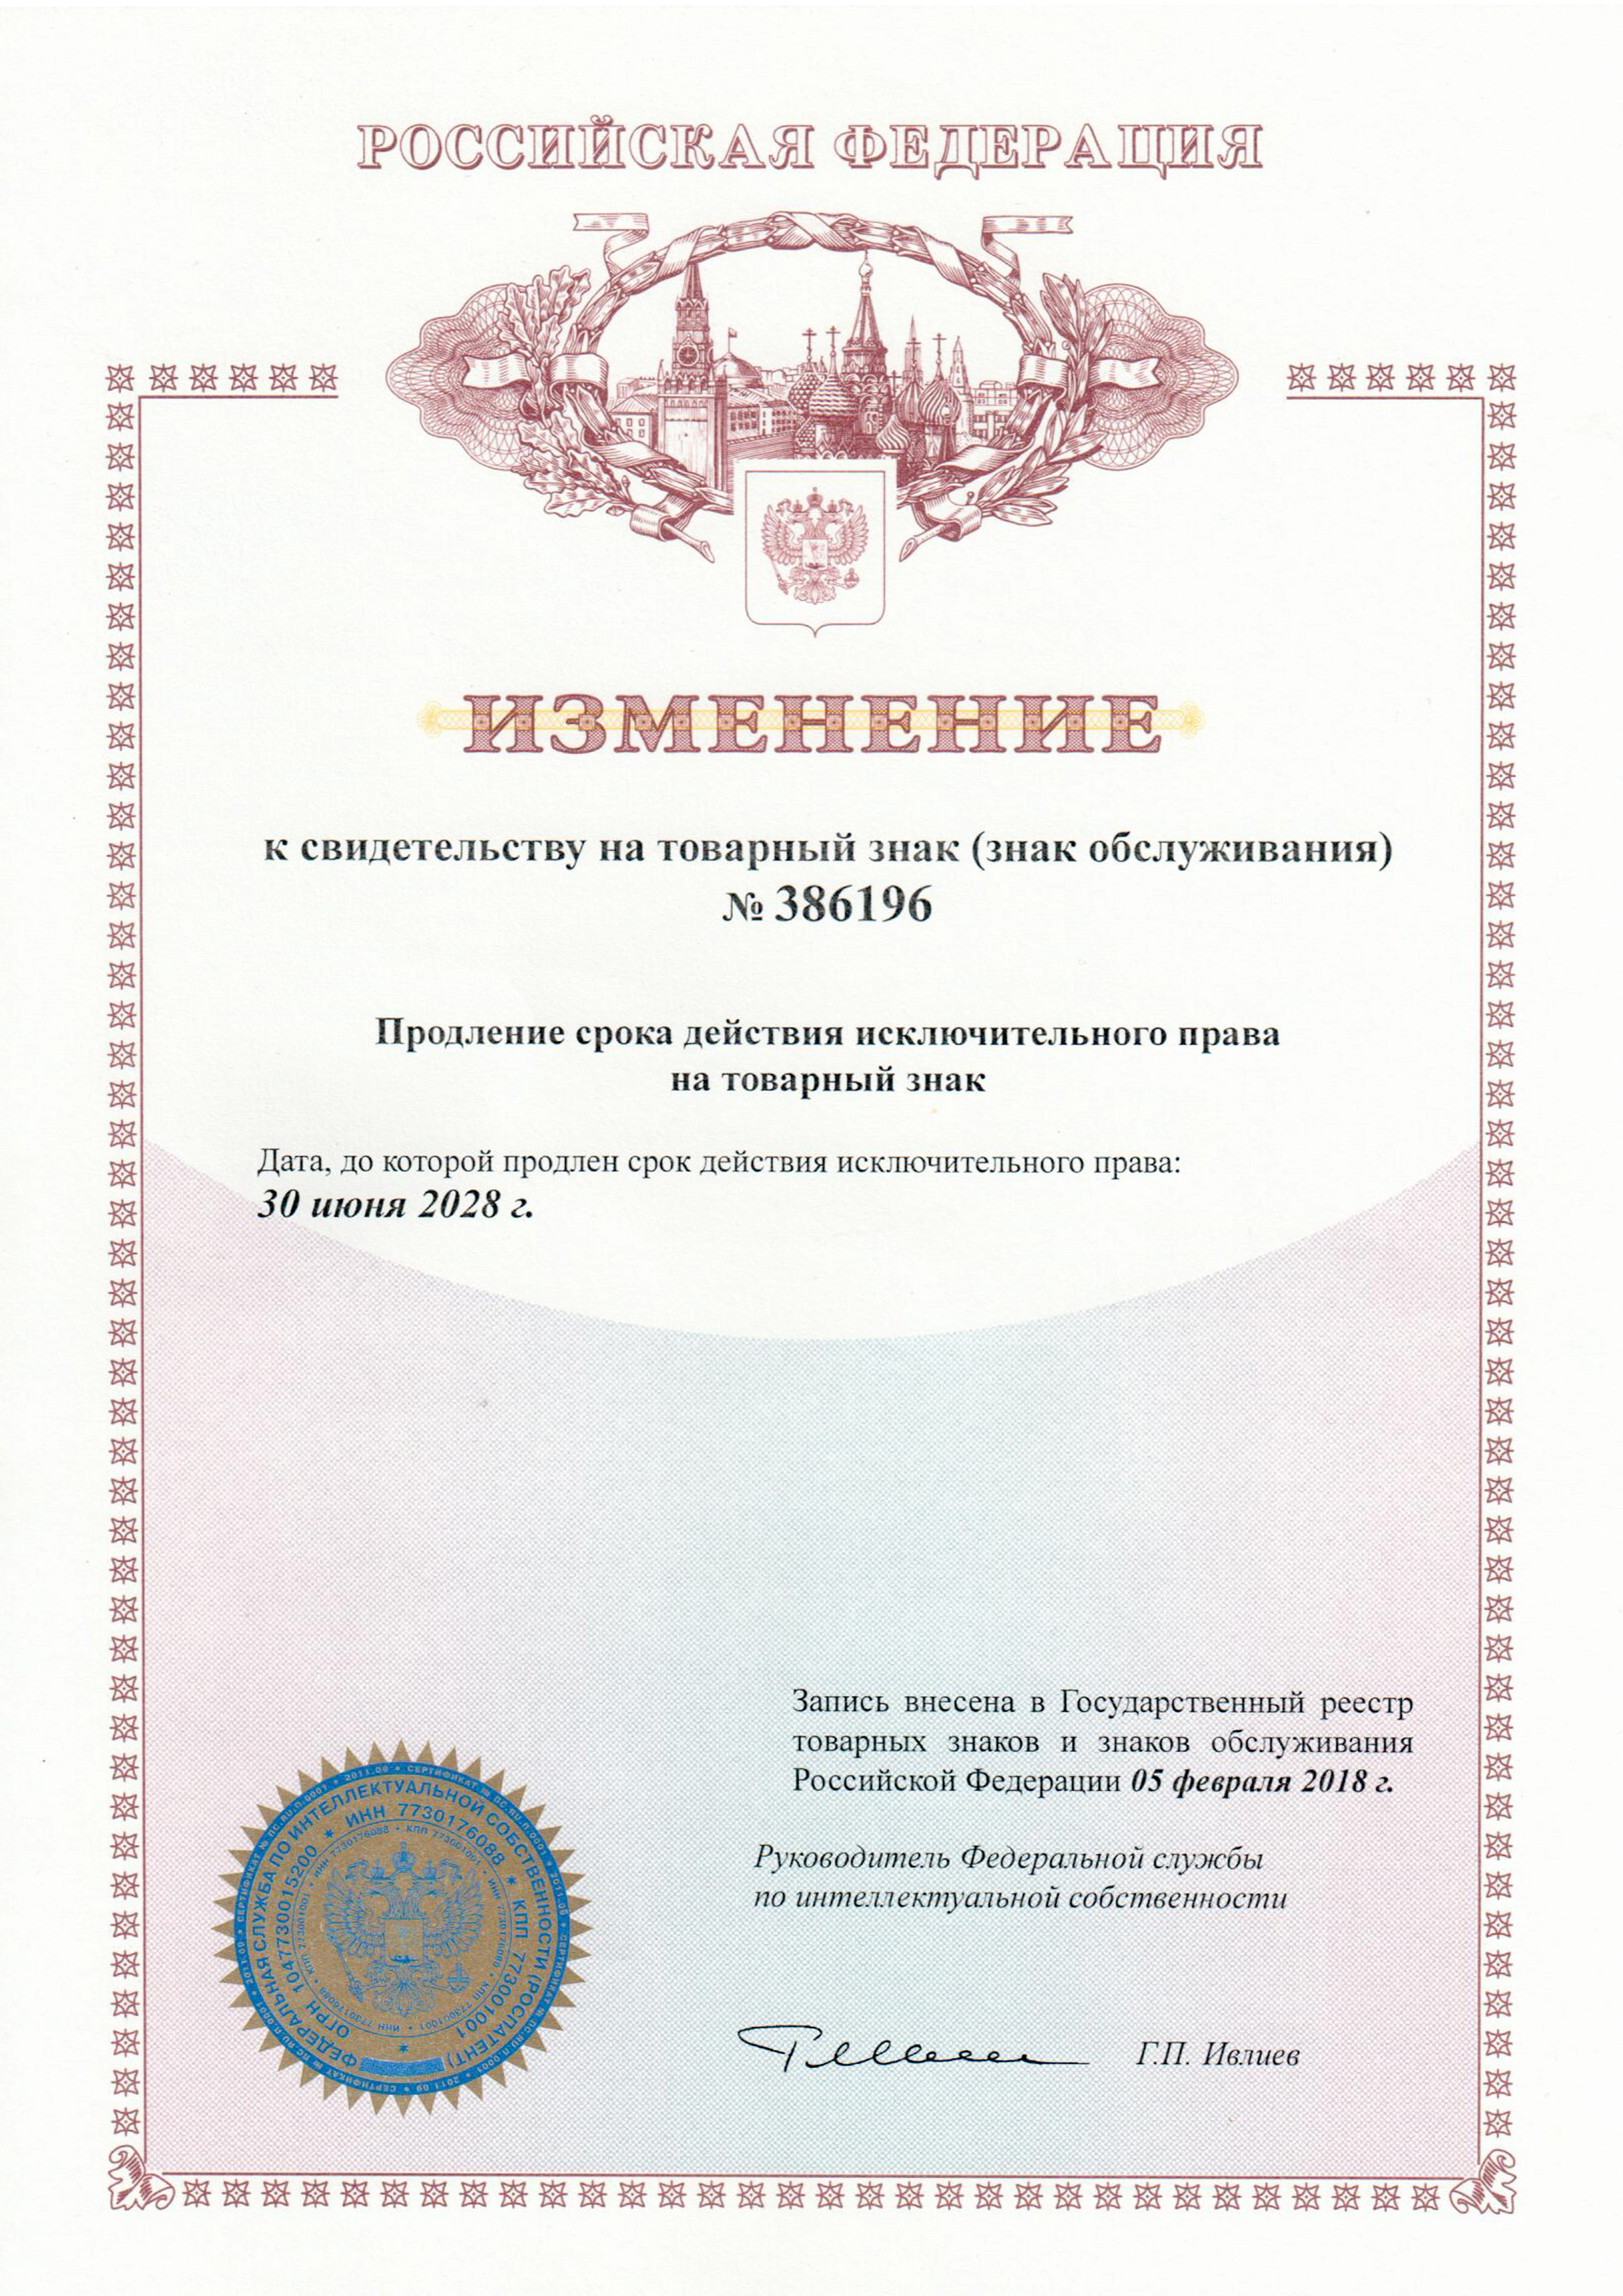 Свидетельство о регистрации товарного знака Thermoreg на территории РФ